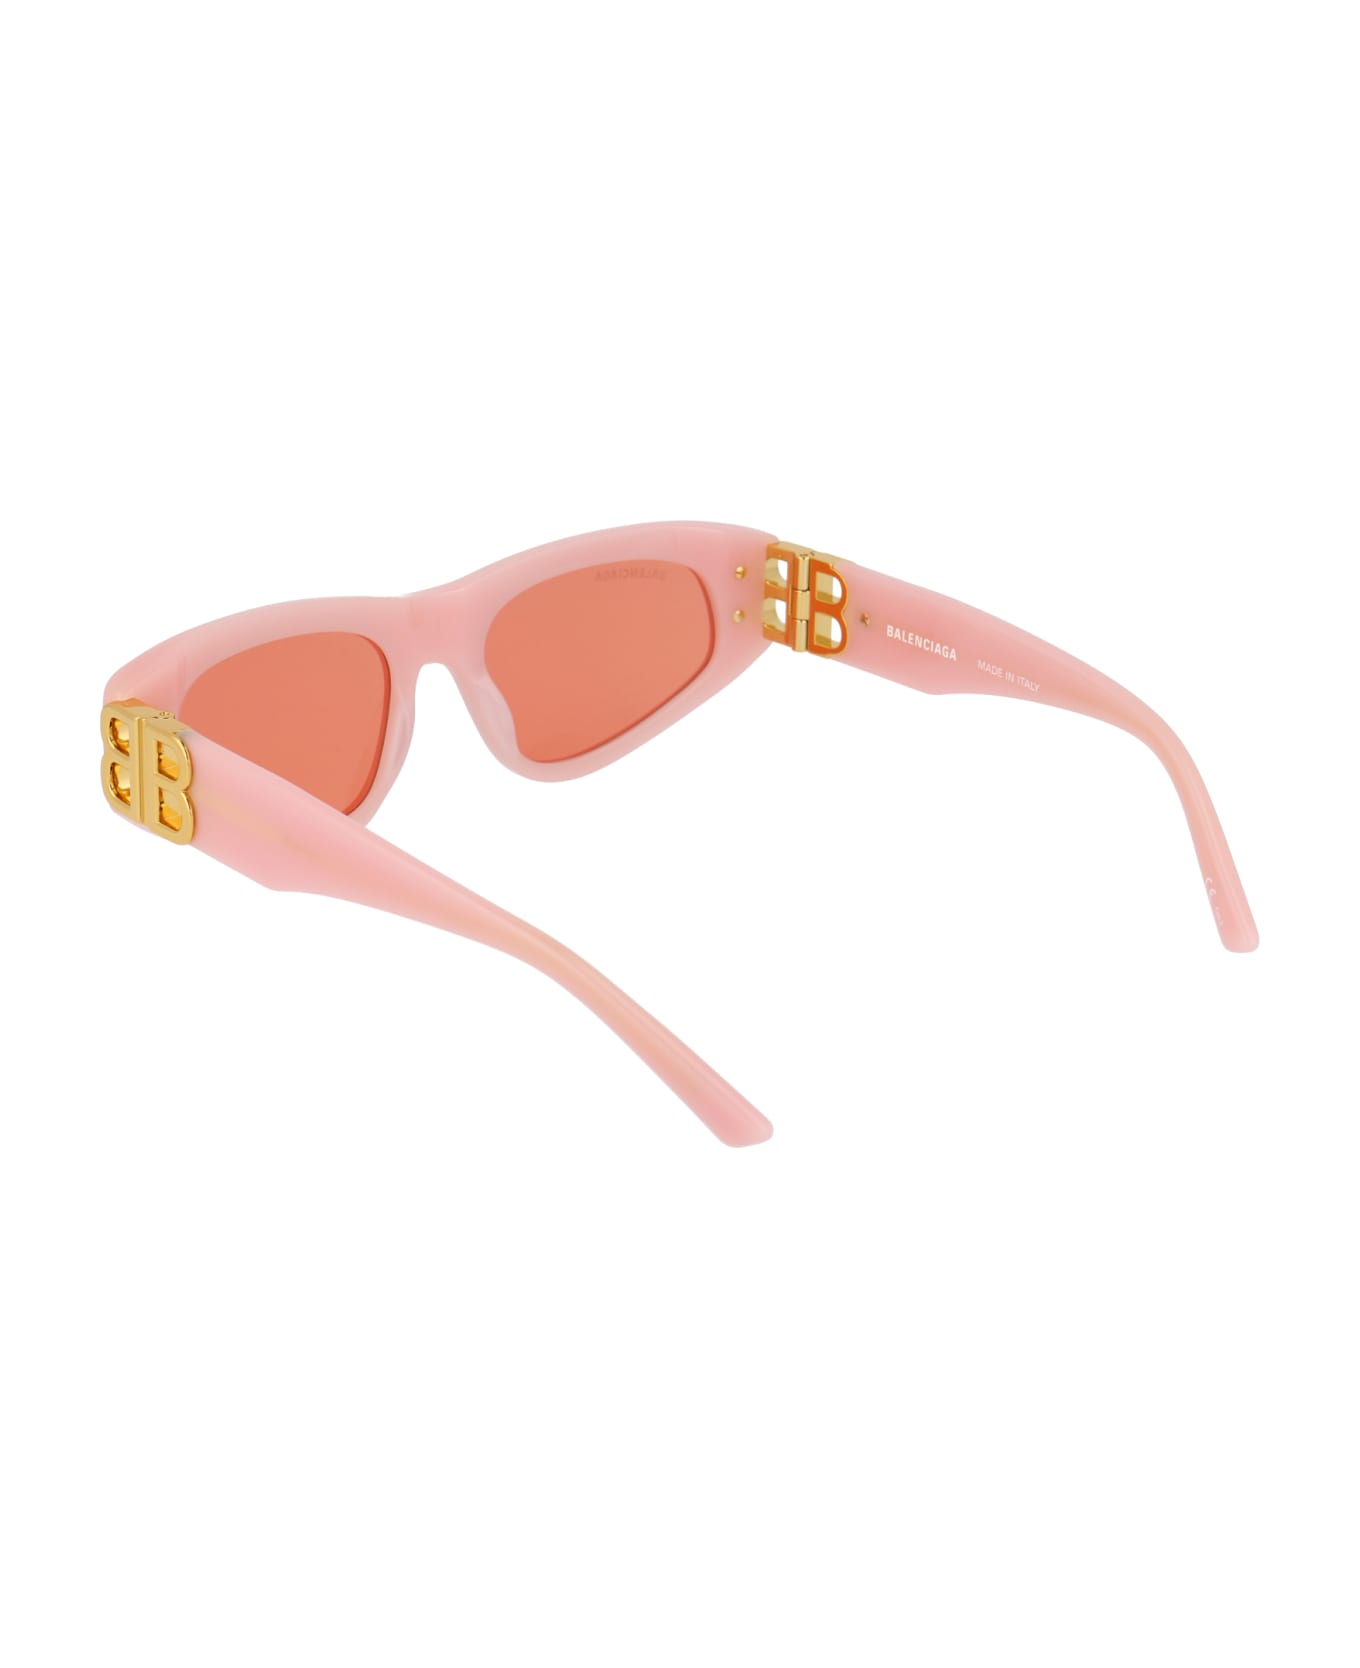 Balenciaga Eyewear Bb0095s Sunglasses - 003 PINK GOLD RED